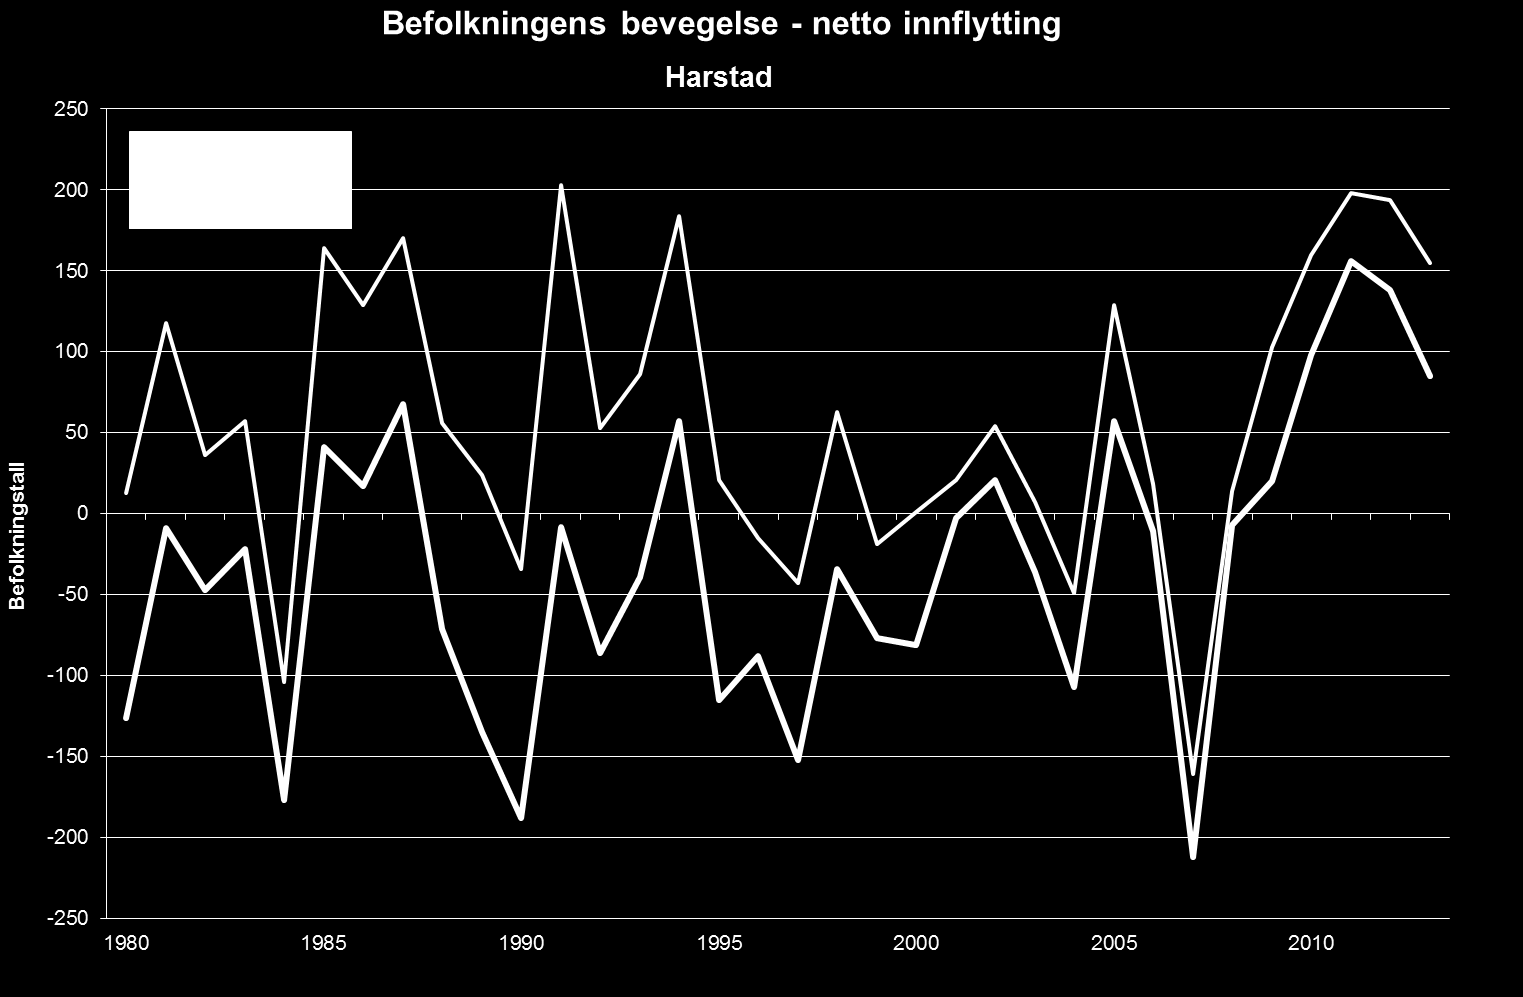 Boliganalyse Harstad 7 Figur 2-2. Prosentvis årlig befolkningsvekst for Harstad, sammenlignet med Norge.